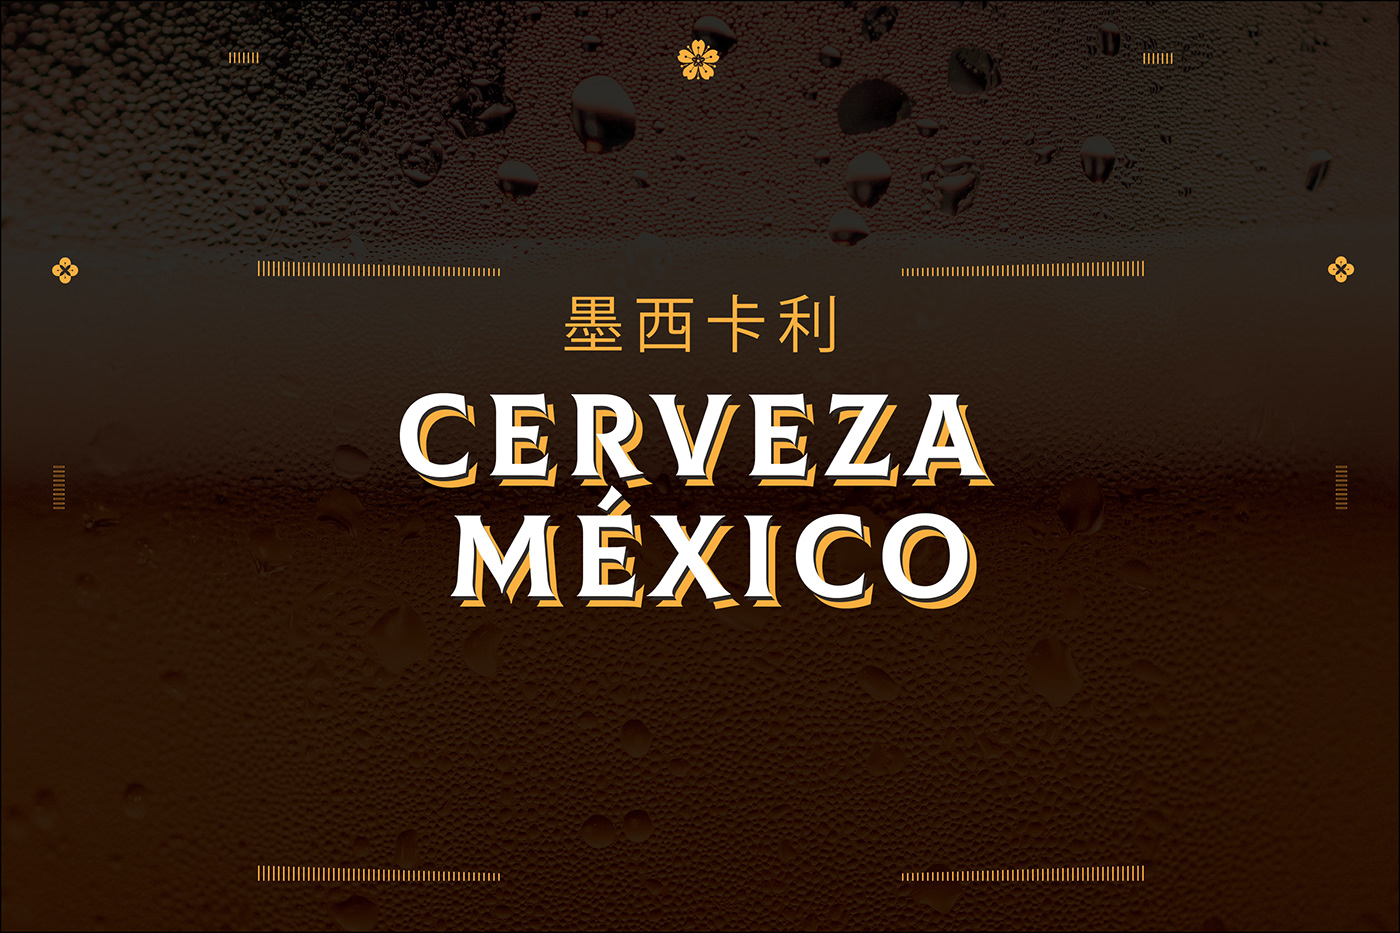 beer craft beer Exhibition  Exhibition Design  graphic design  industrial design  mexicali mexico mexico design Stand